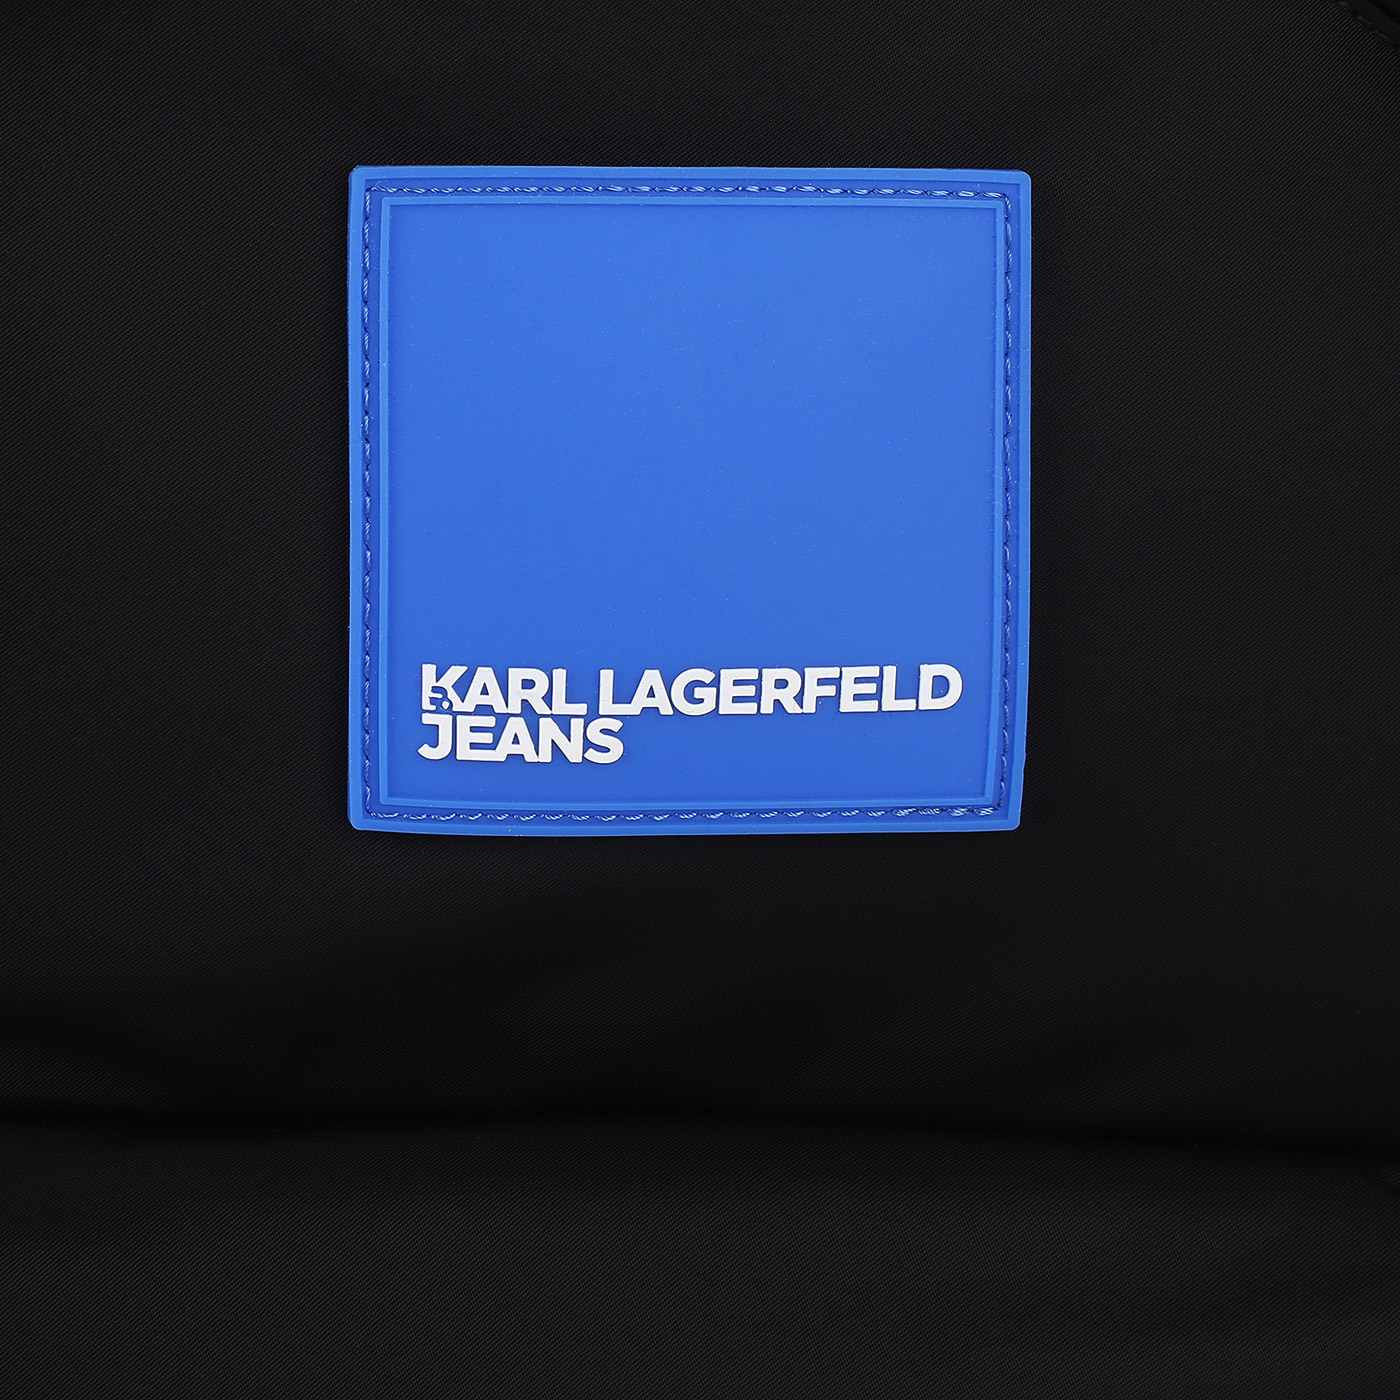 Городской рюкзак Karl Lagerfeld Jeans Urban